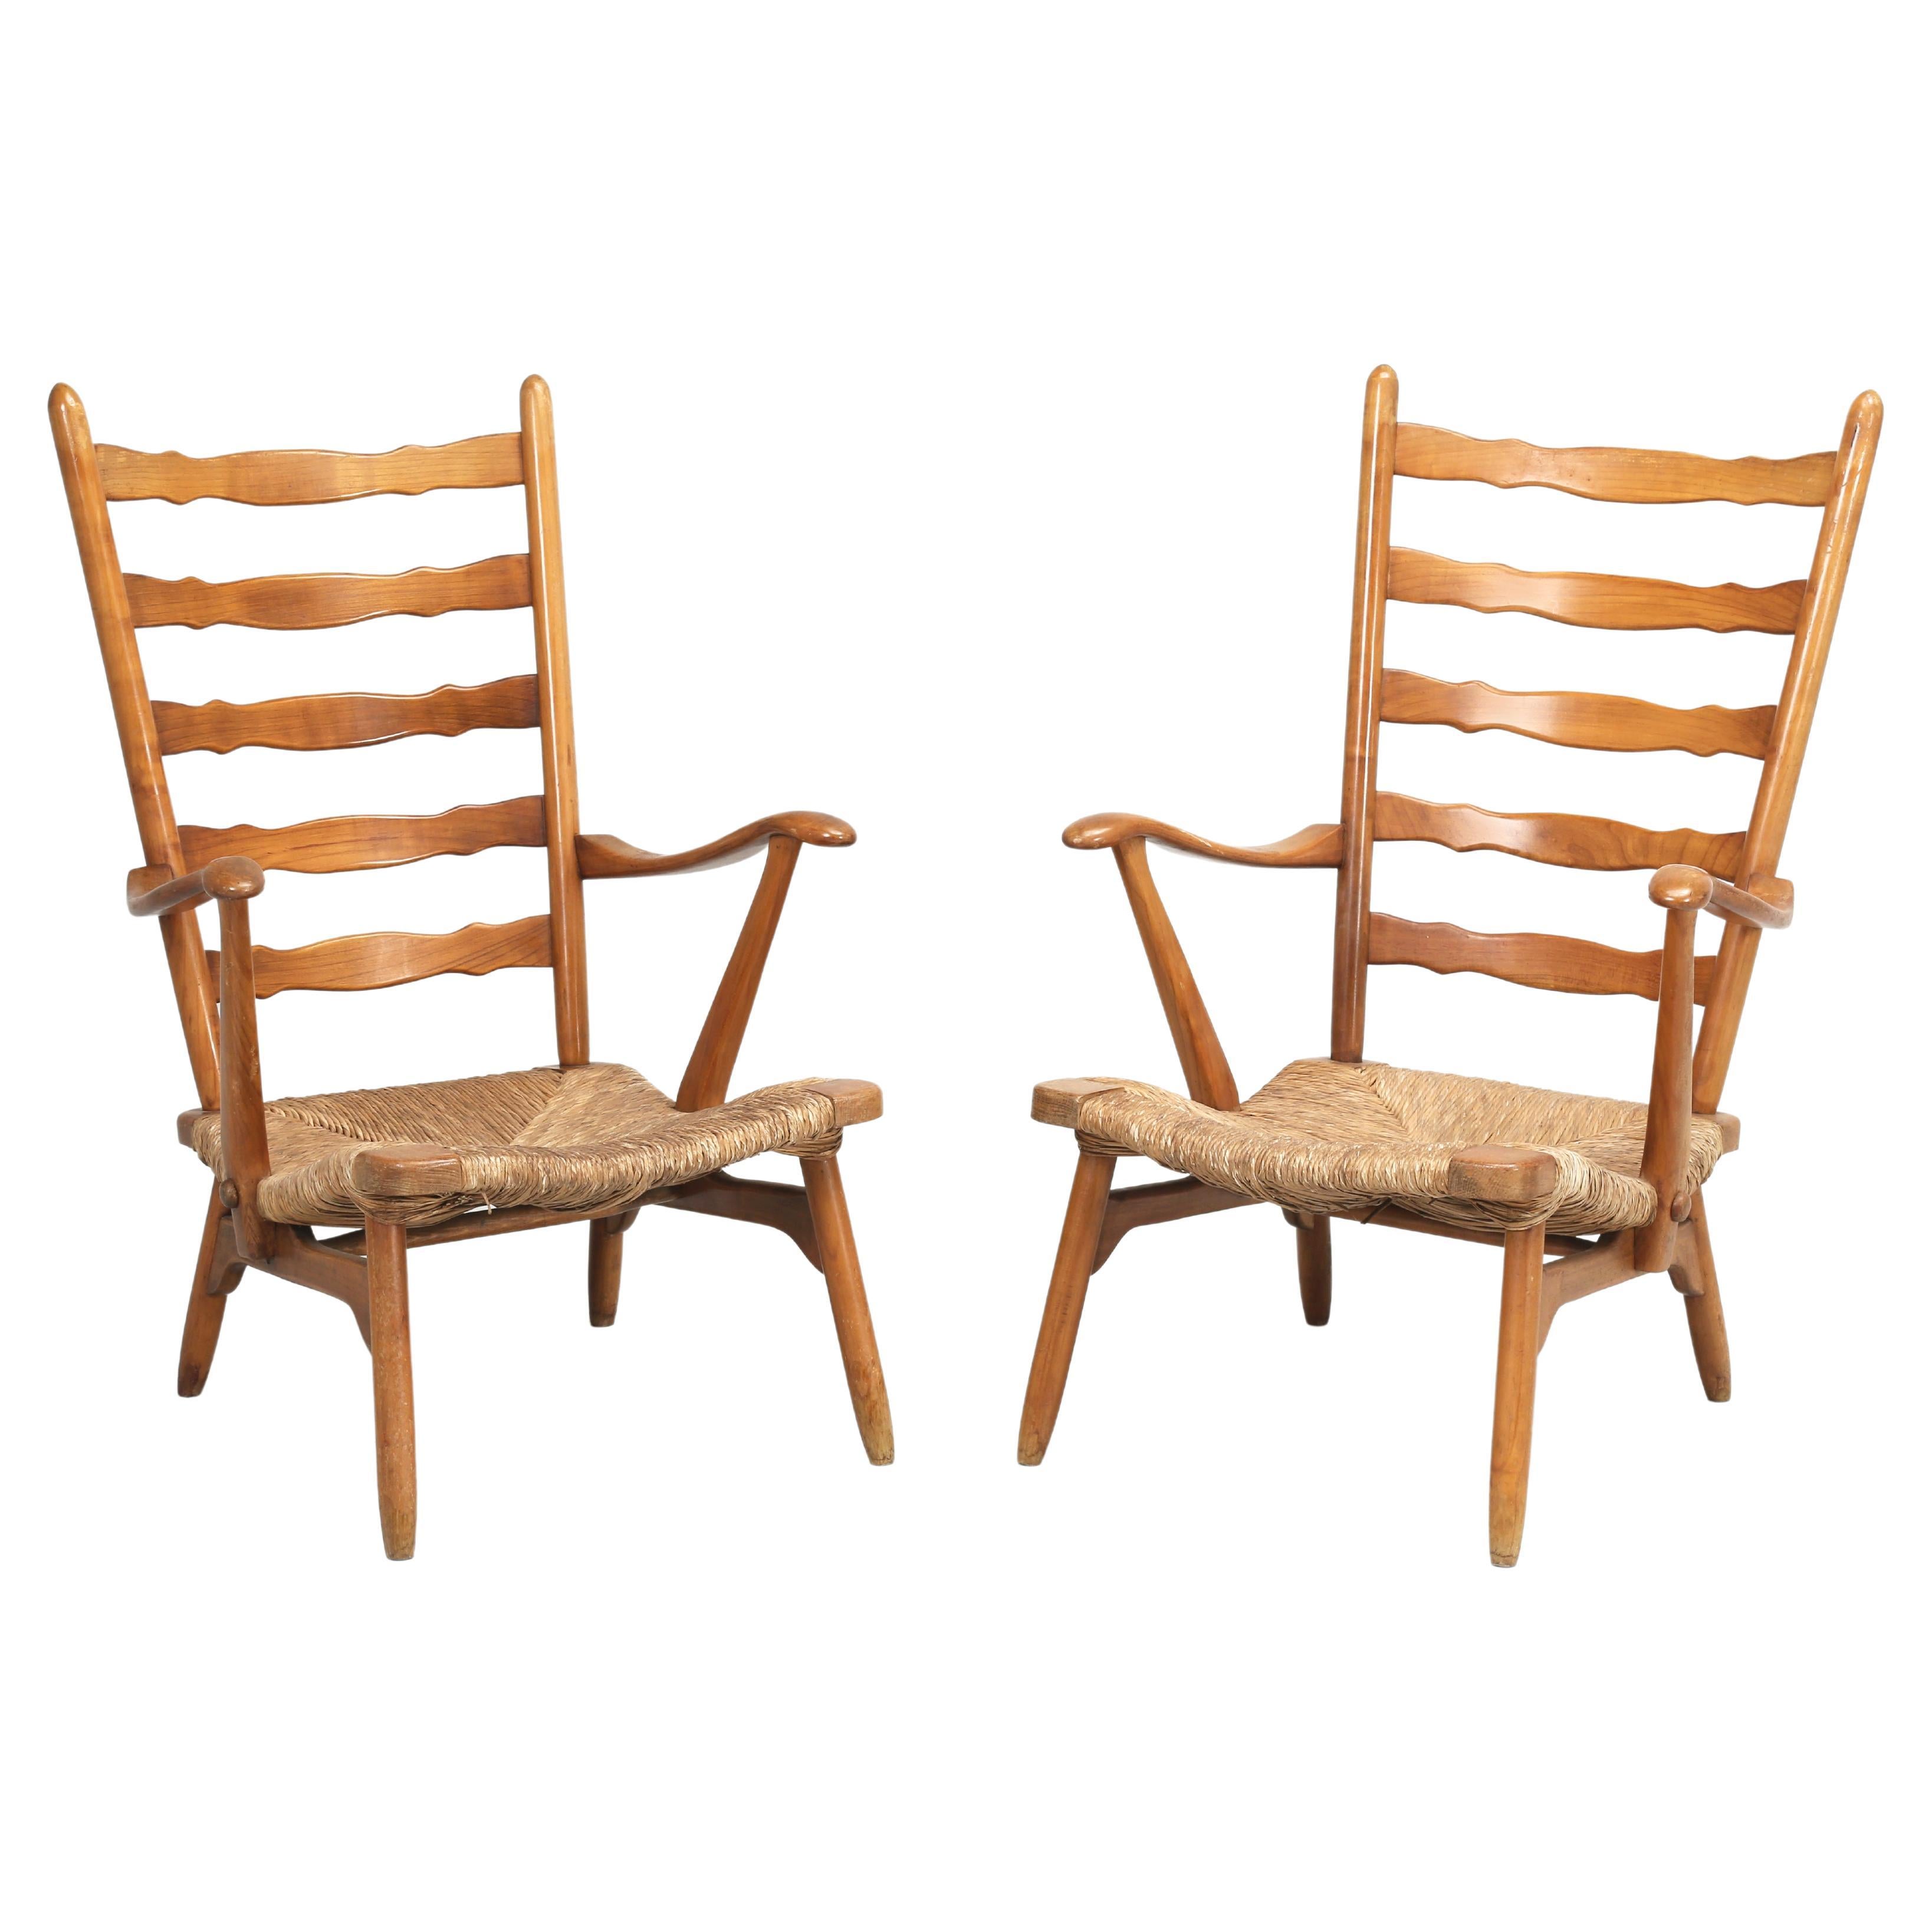 Scandinavian Mid-Century Modern Pair of Chairs Unrestored Condition, circa 1960s